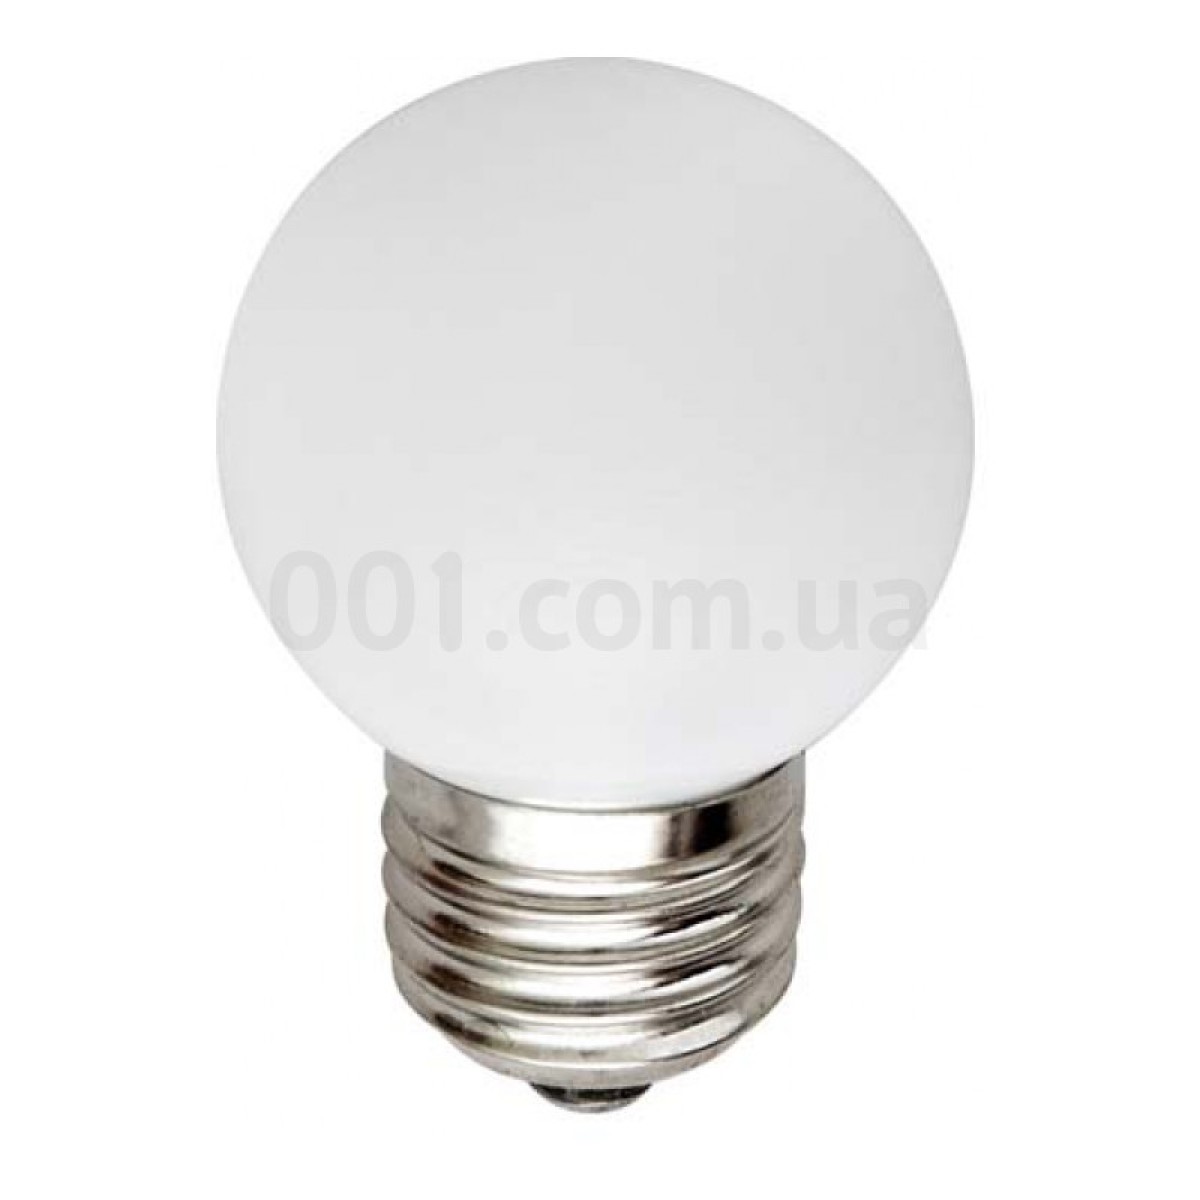 Светодиодная лампа LB-37 G45 (шар) 1Вт 6400K E27, Feron 256_256.jpg